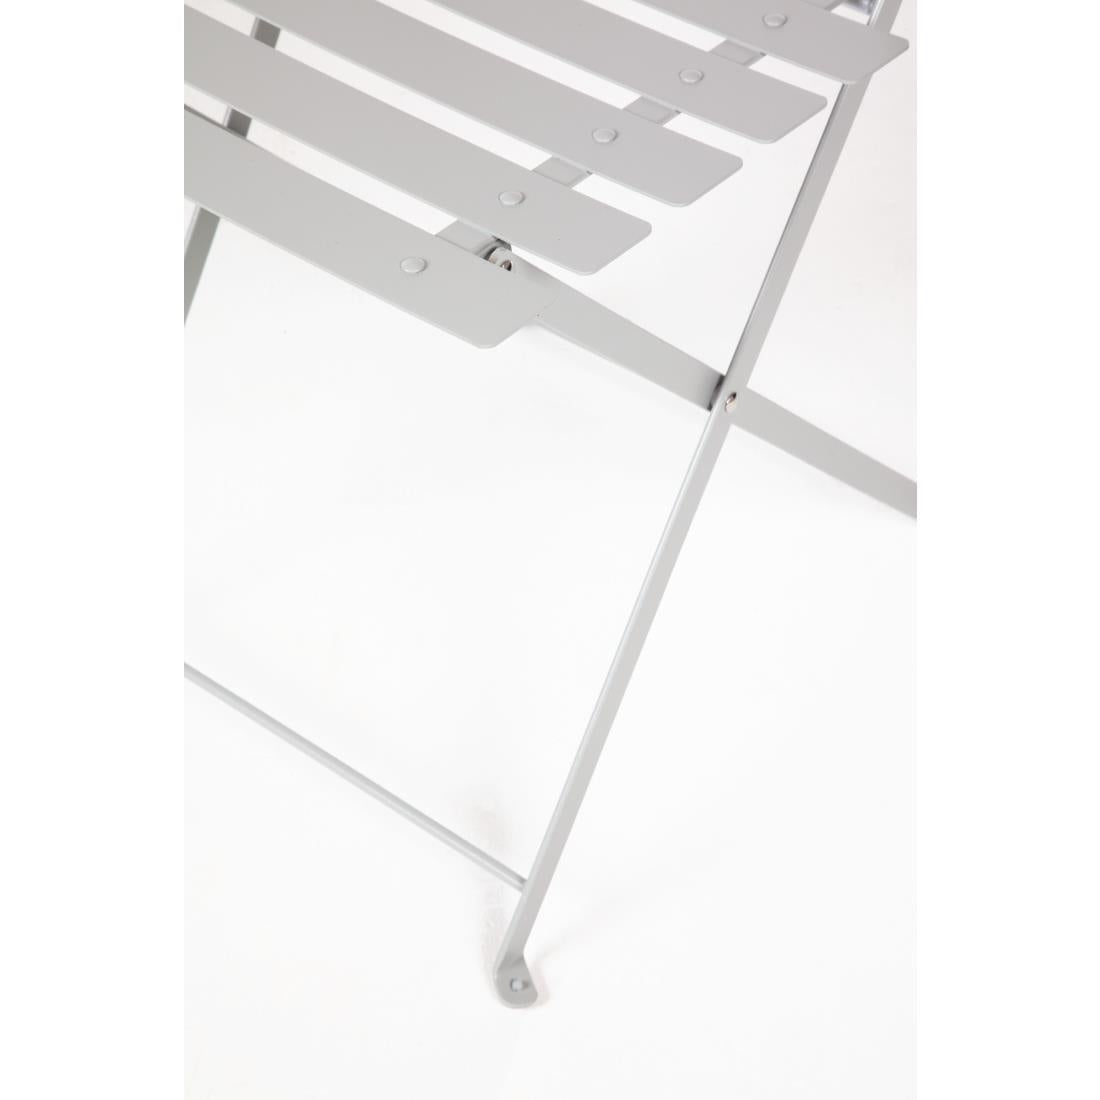 Bolero Steel Pavement StyleFolding Chairs Grey (Pack of 2) JD Catering Equipment Solutions Ltd